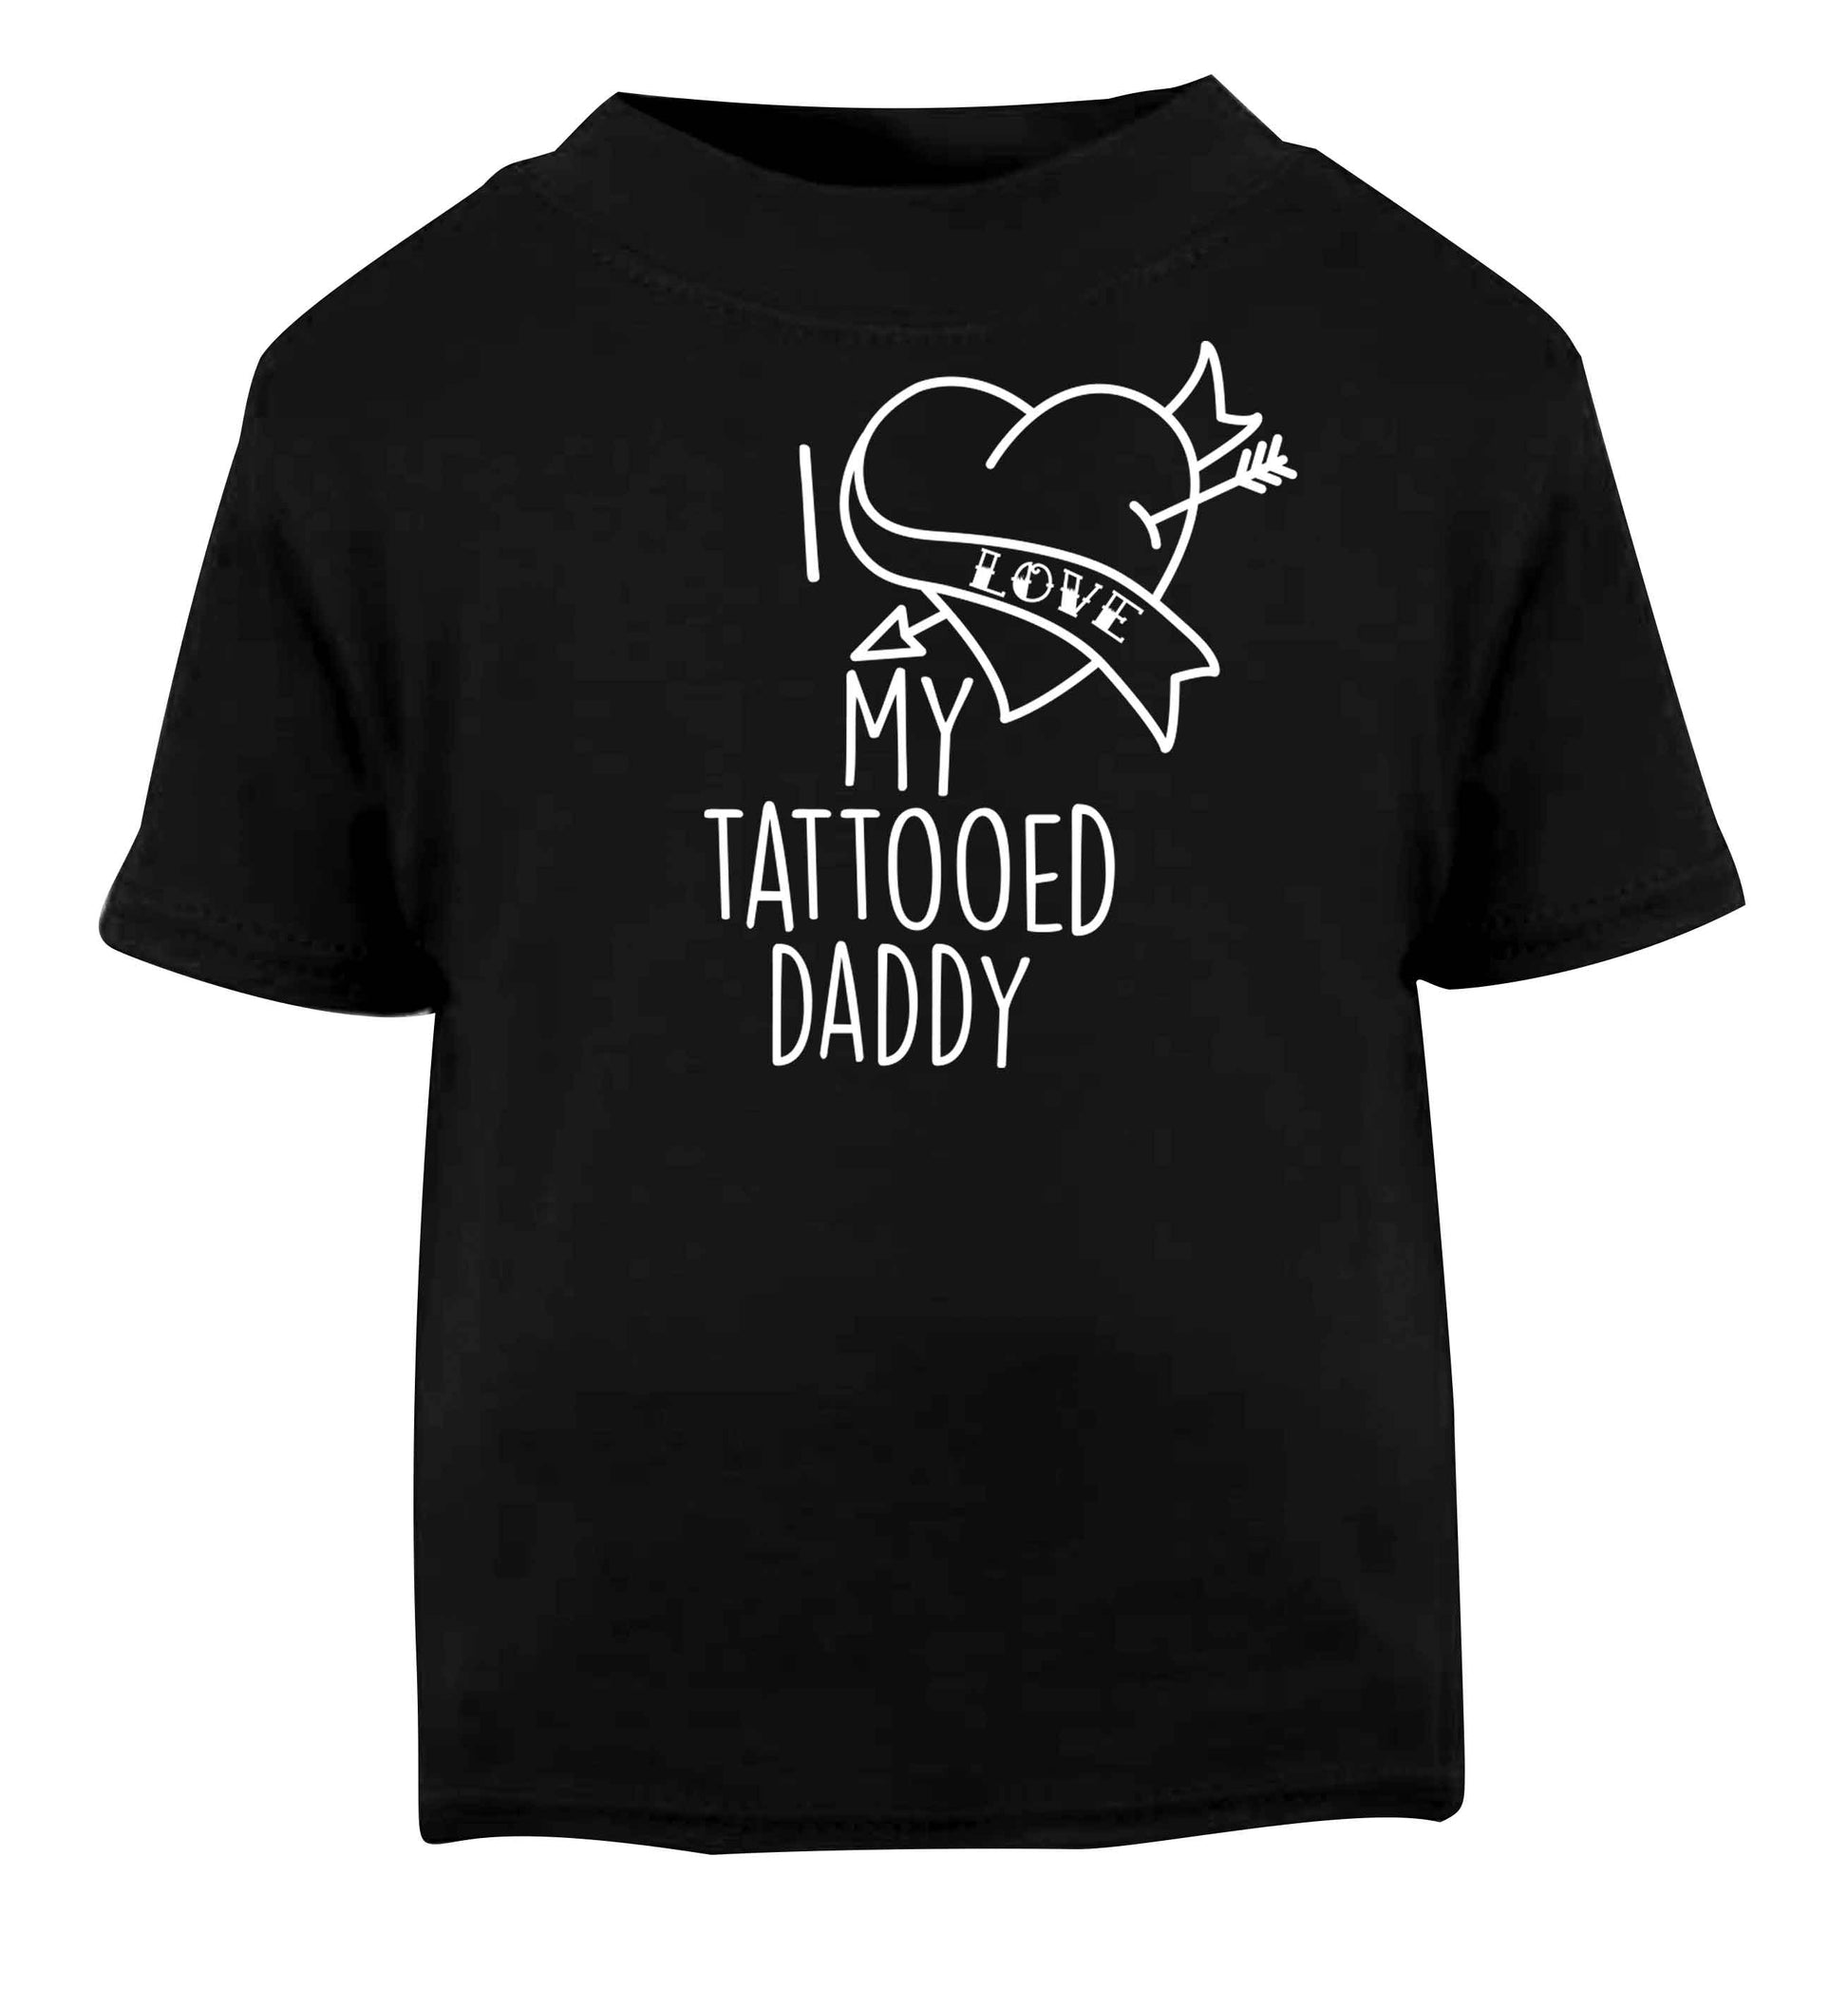 I love my tattooed daddy Black baby toddler Tshirt 2 years